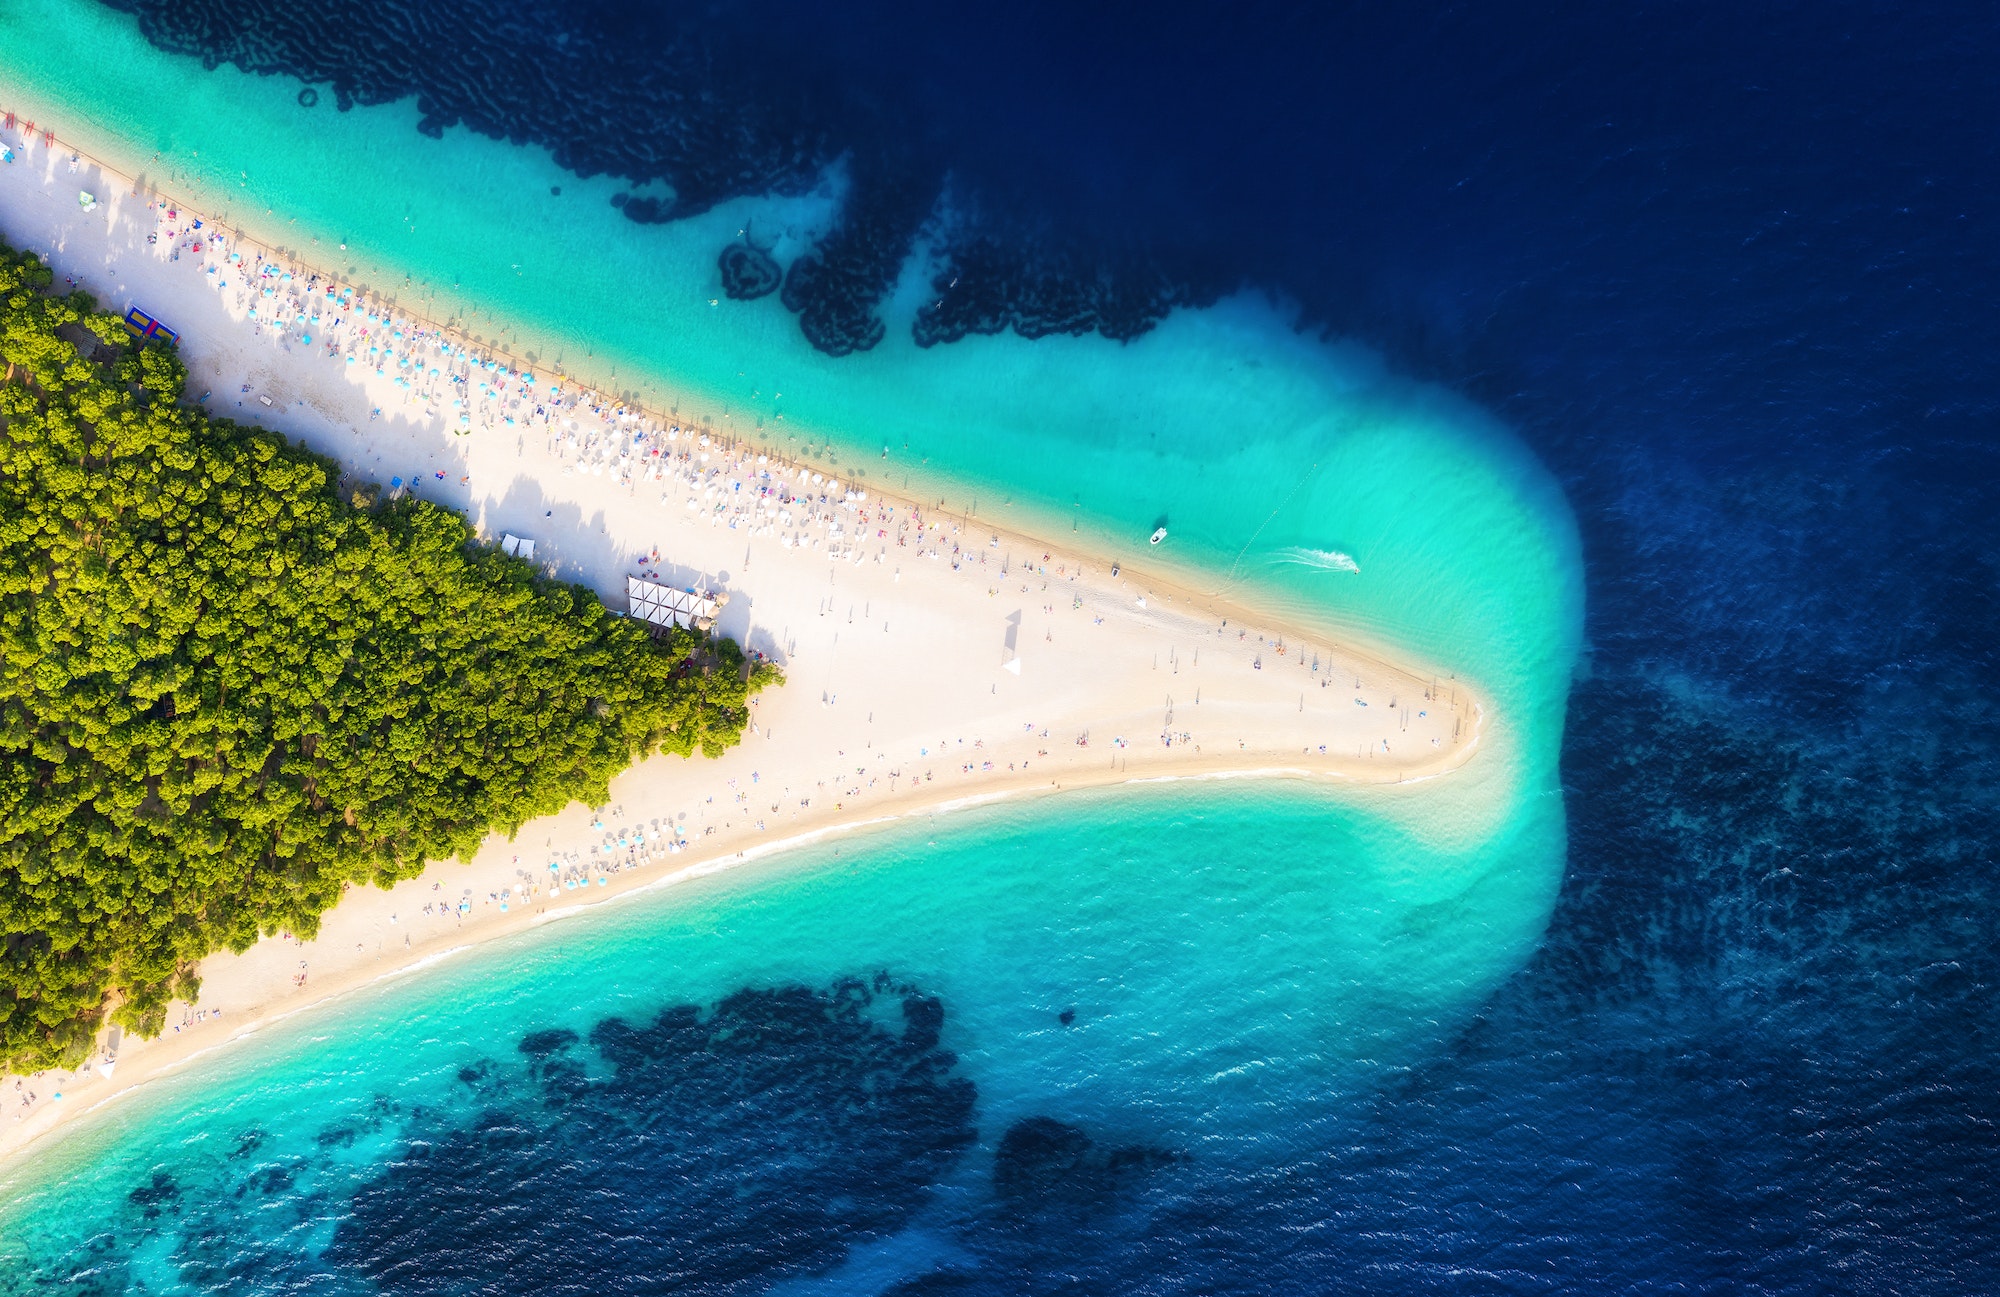 Zlatni rat beach, Hvar island, Croatia. Aerial landscape at the summer time